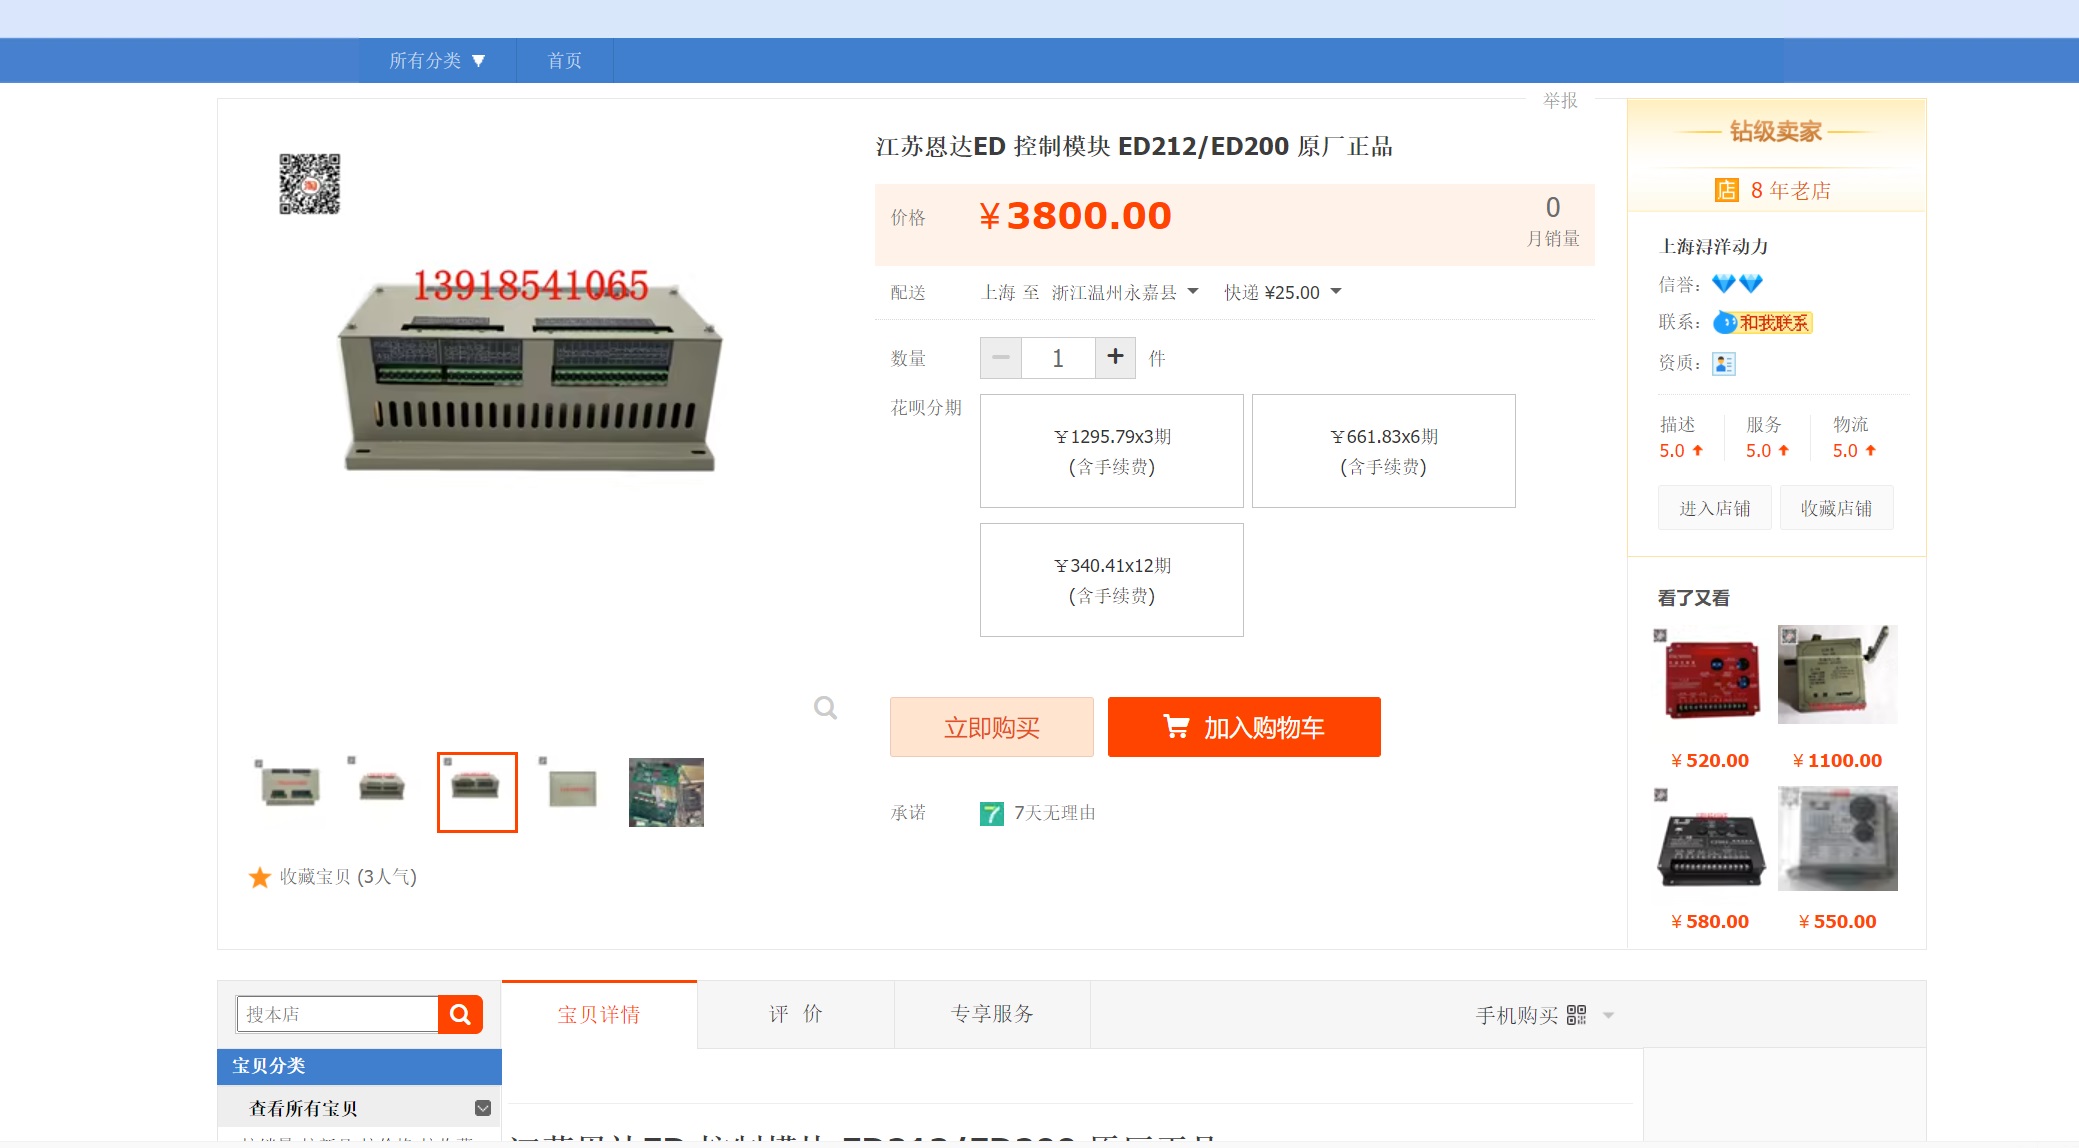 Sensor de presión del transmisor de presión Jiangsu Enda producto genuino de fábrica HQ1002